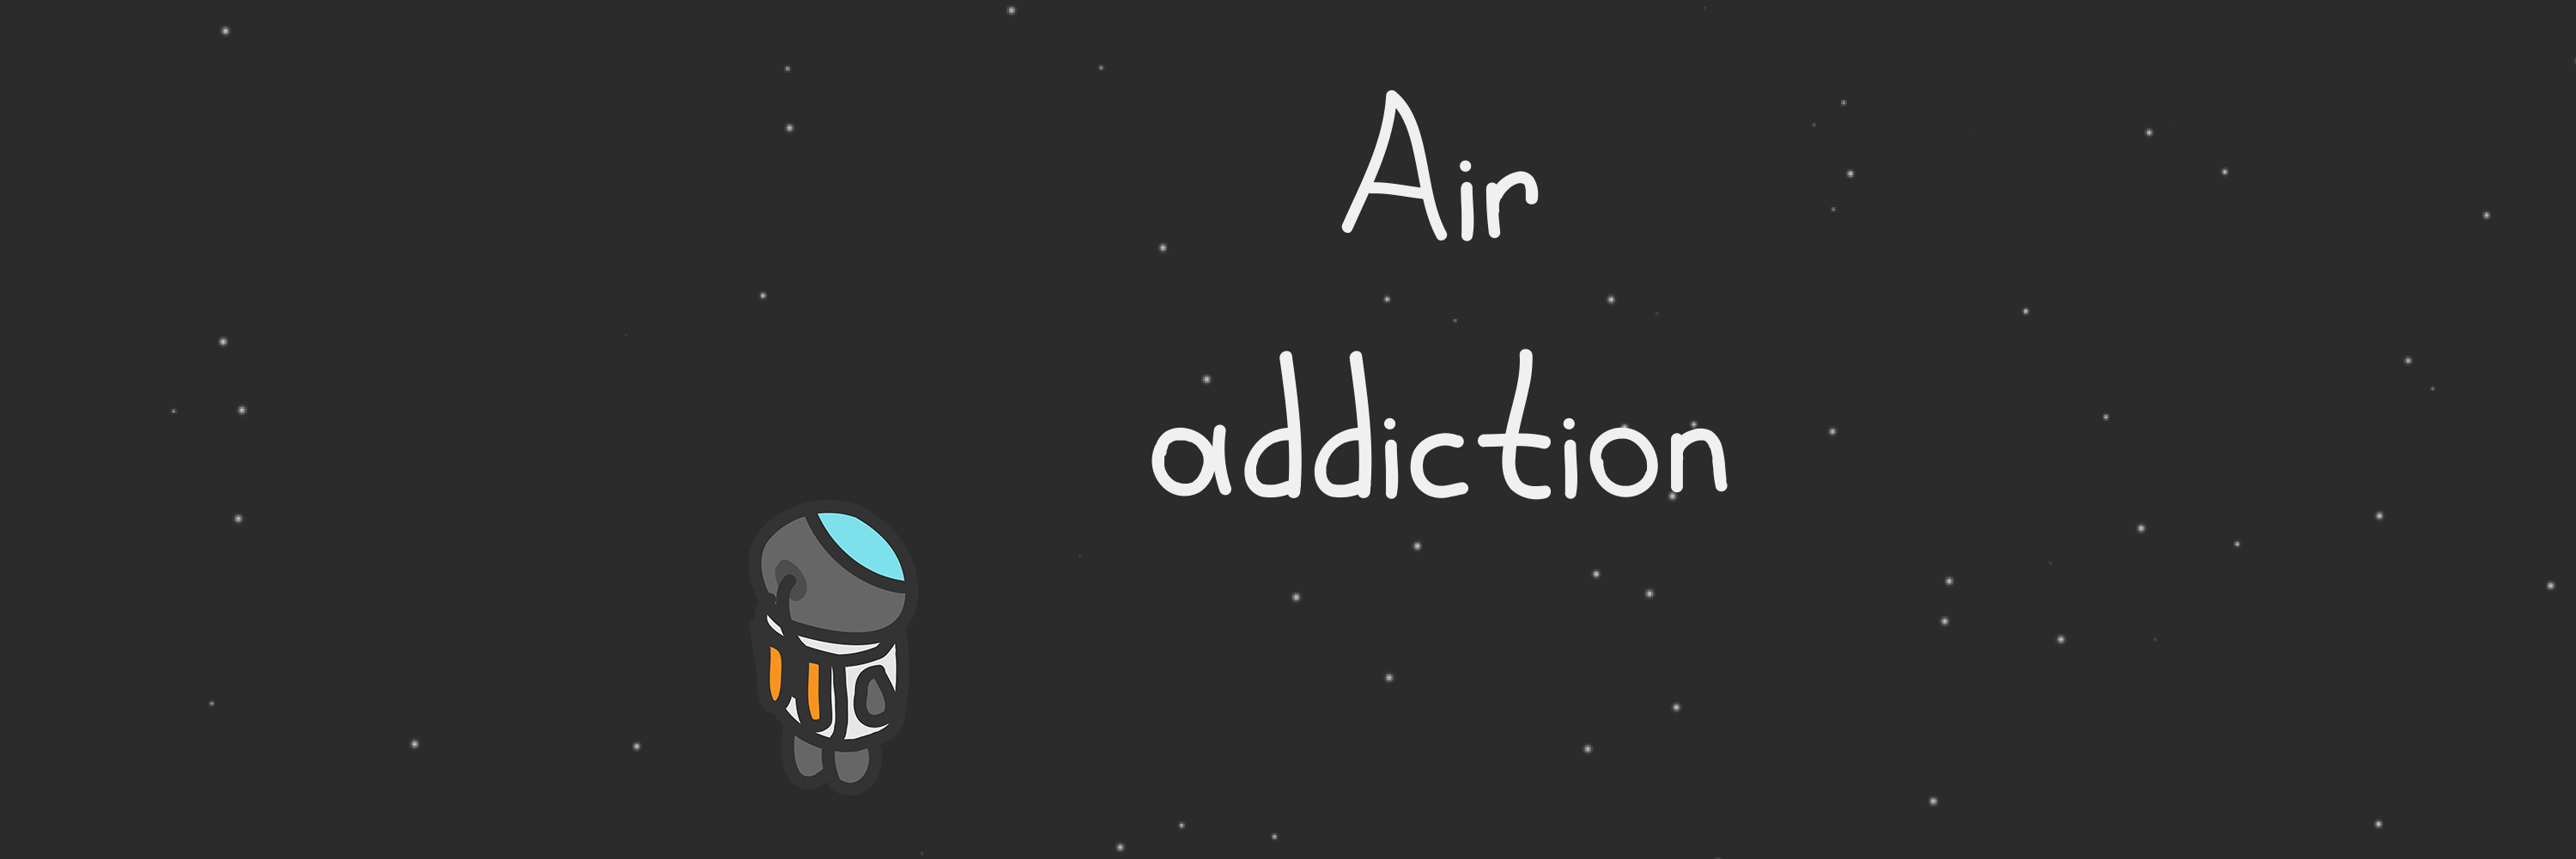 Air addiction